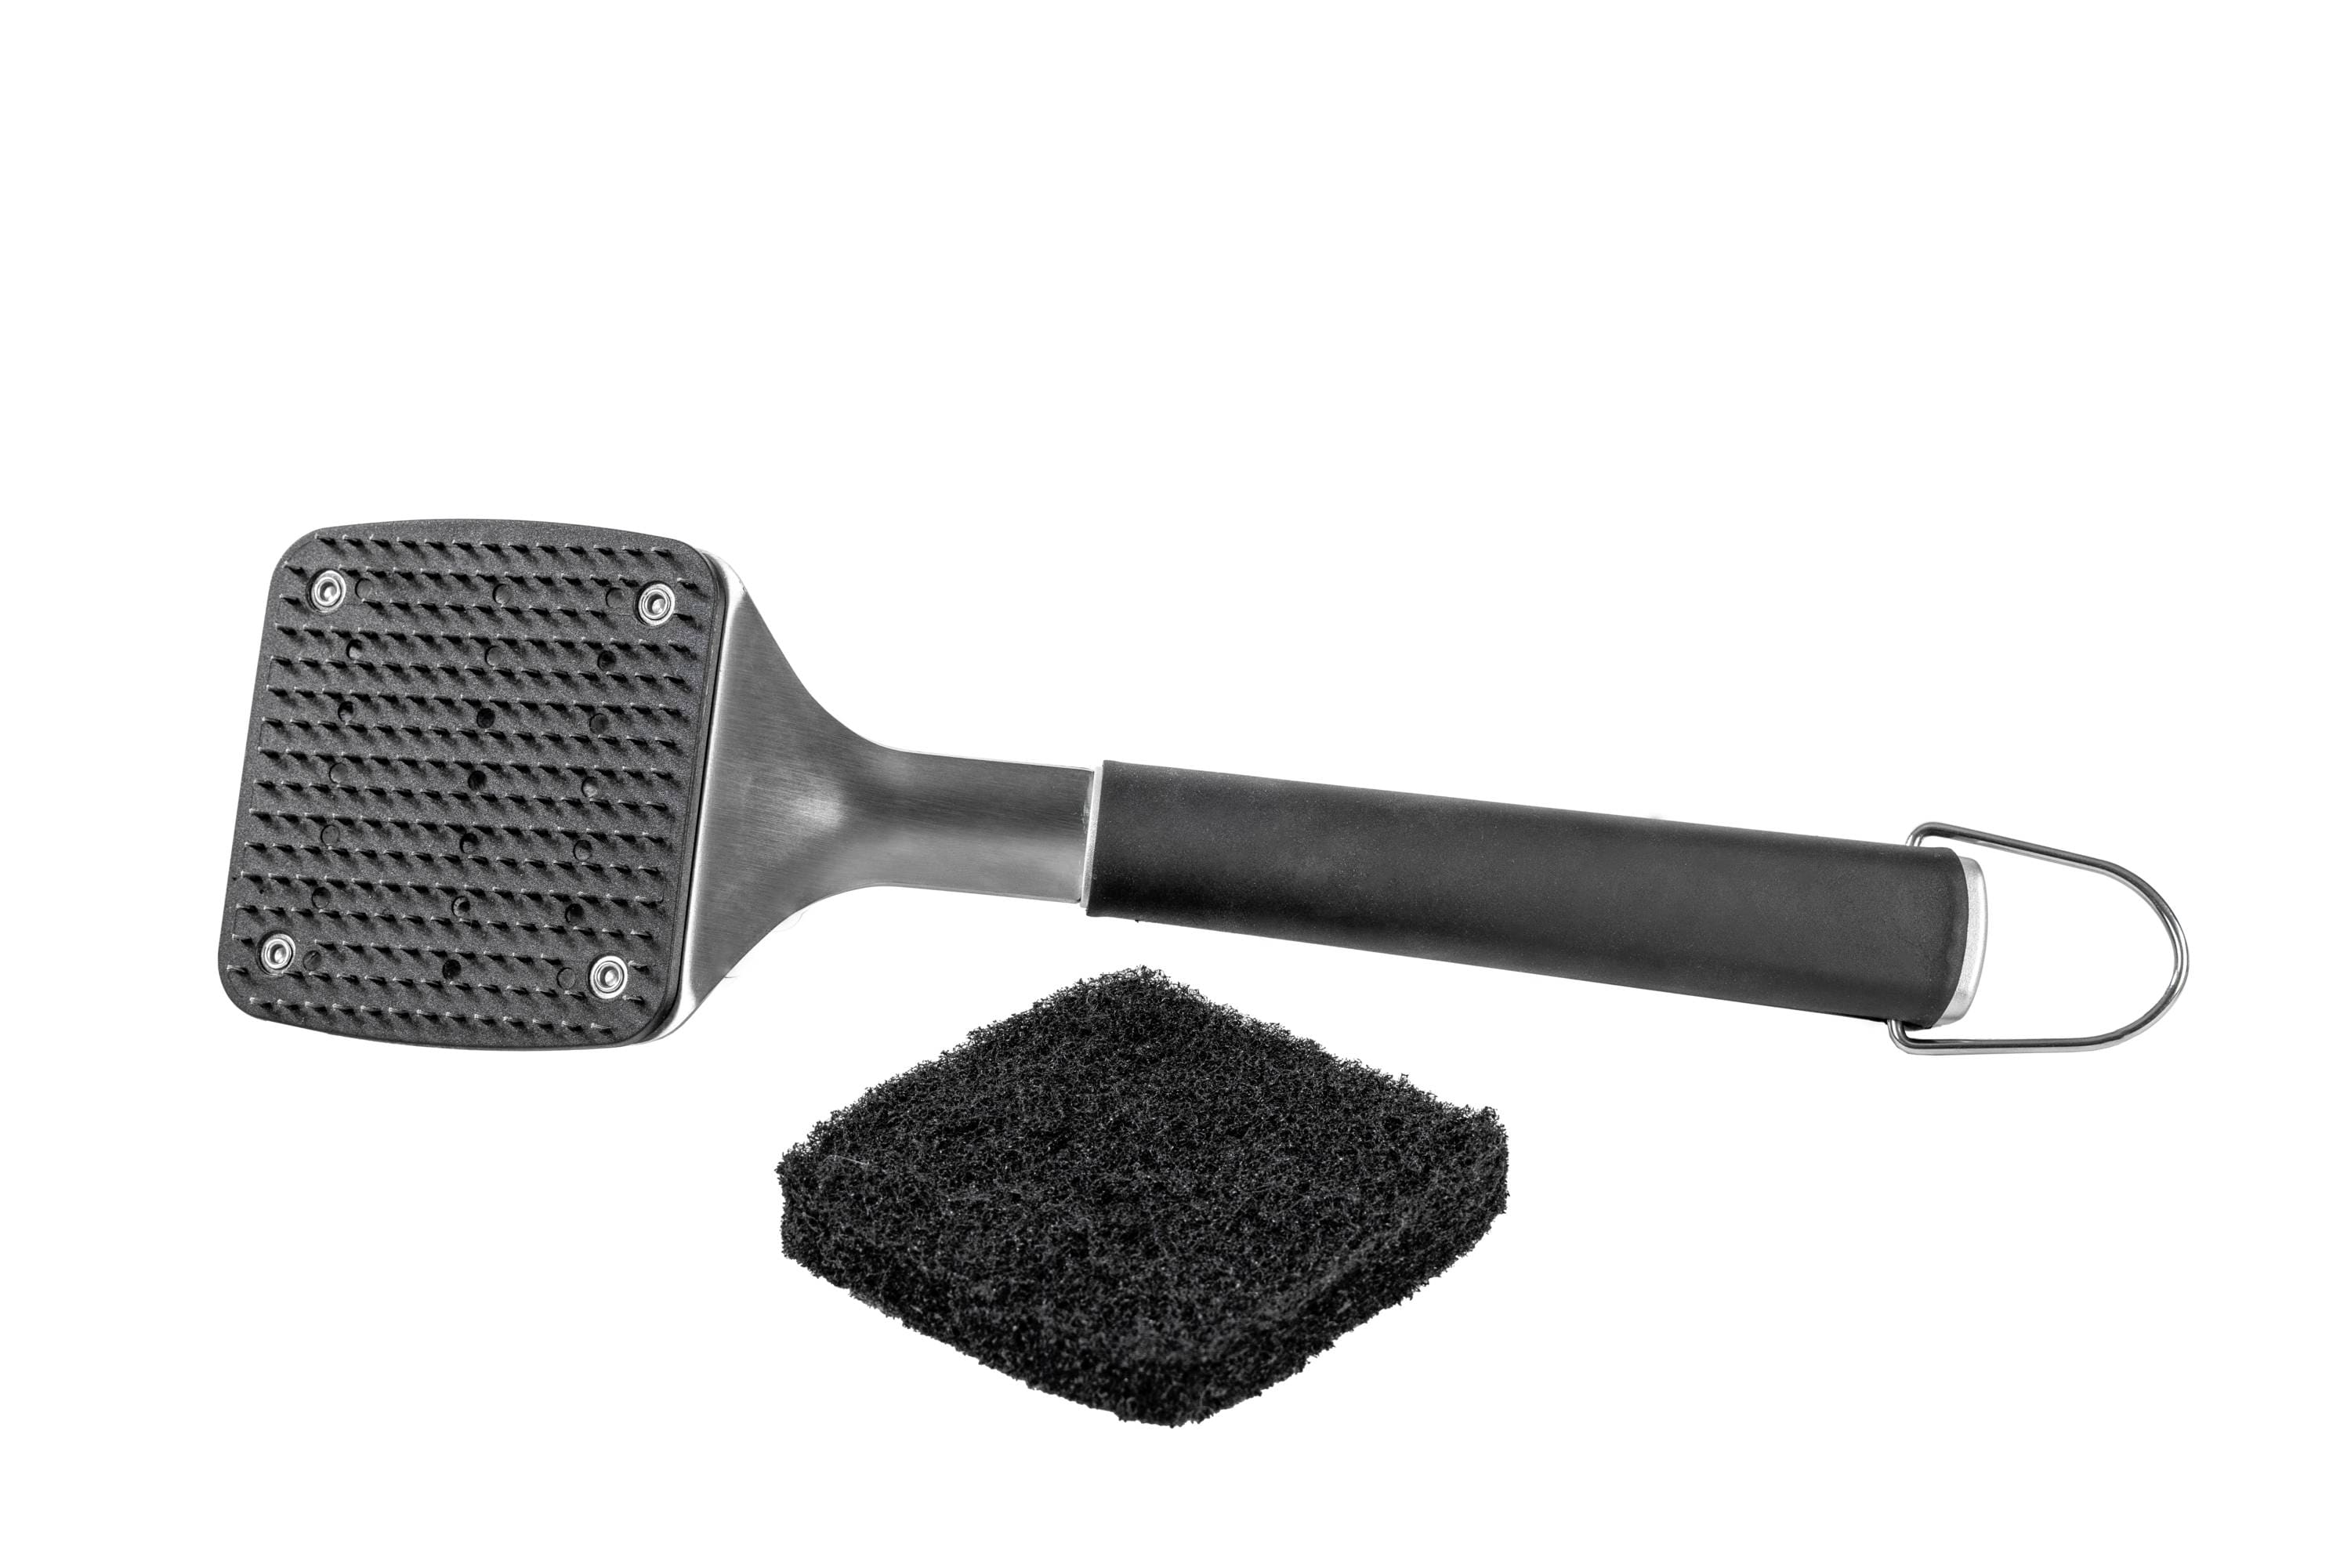  Pit Boss 40934 Ultimate Griddle Scraper, Black : Patio, Lawn &  Garden